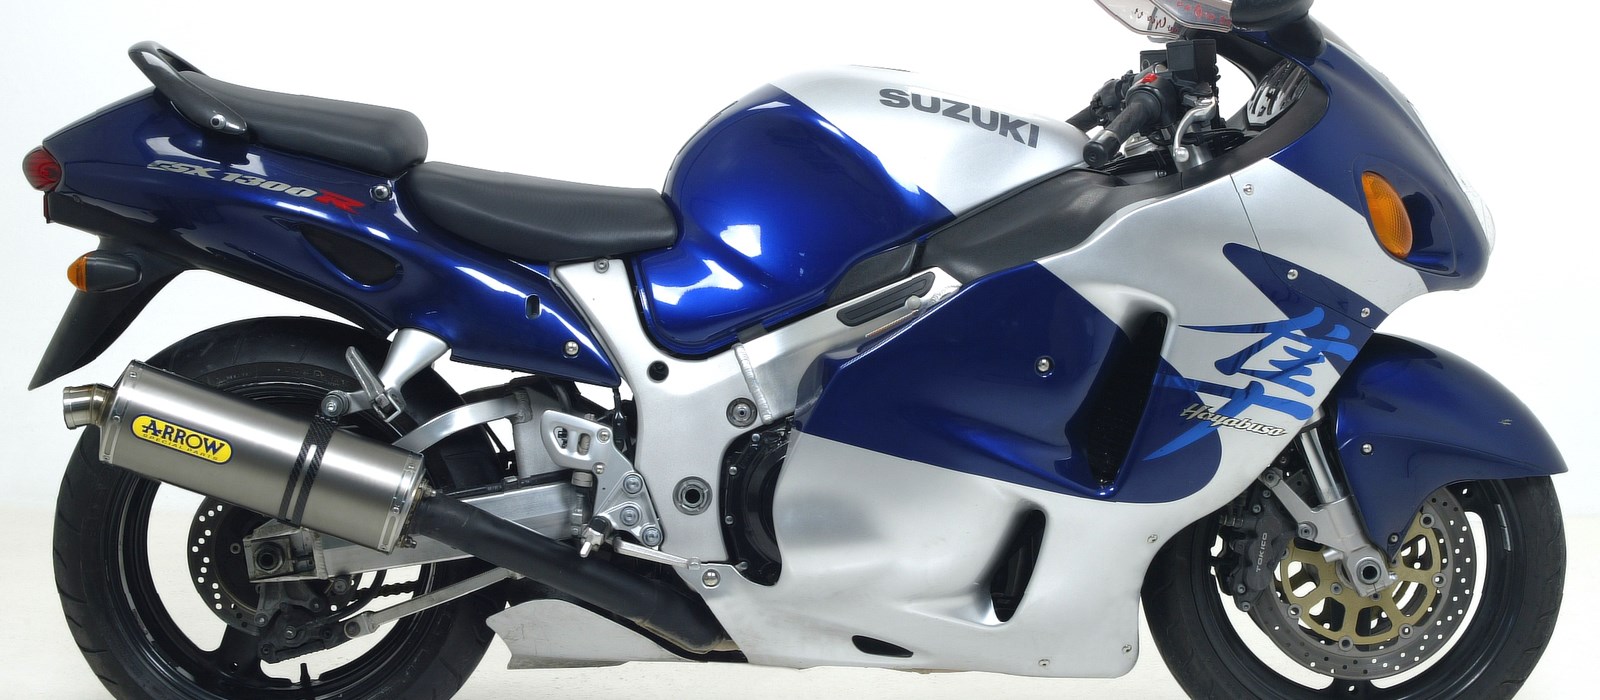 Silencieux ARROW Race-Tech pour Suzuki GSX 1300 R Hayabusa (99-06)